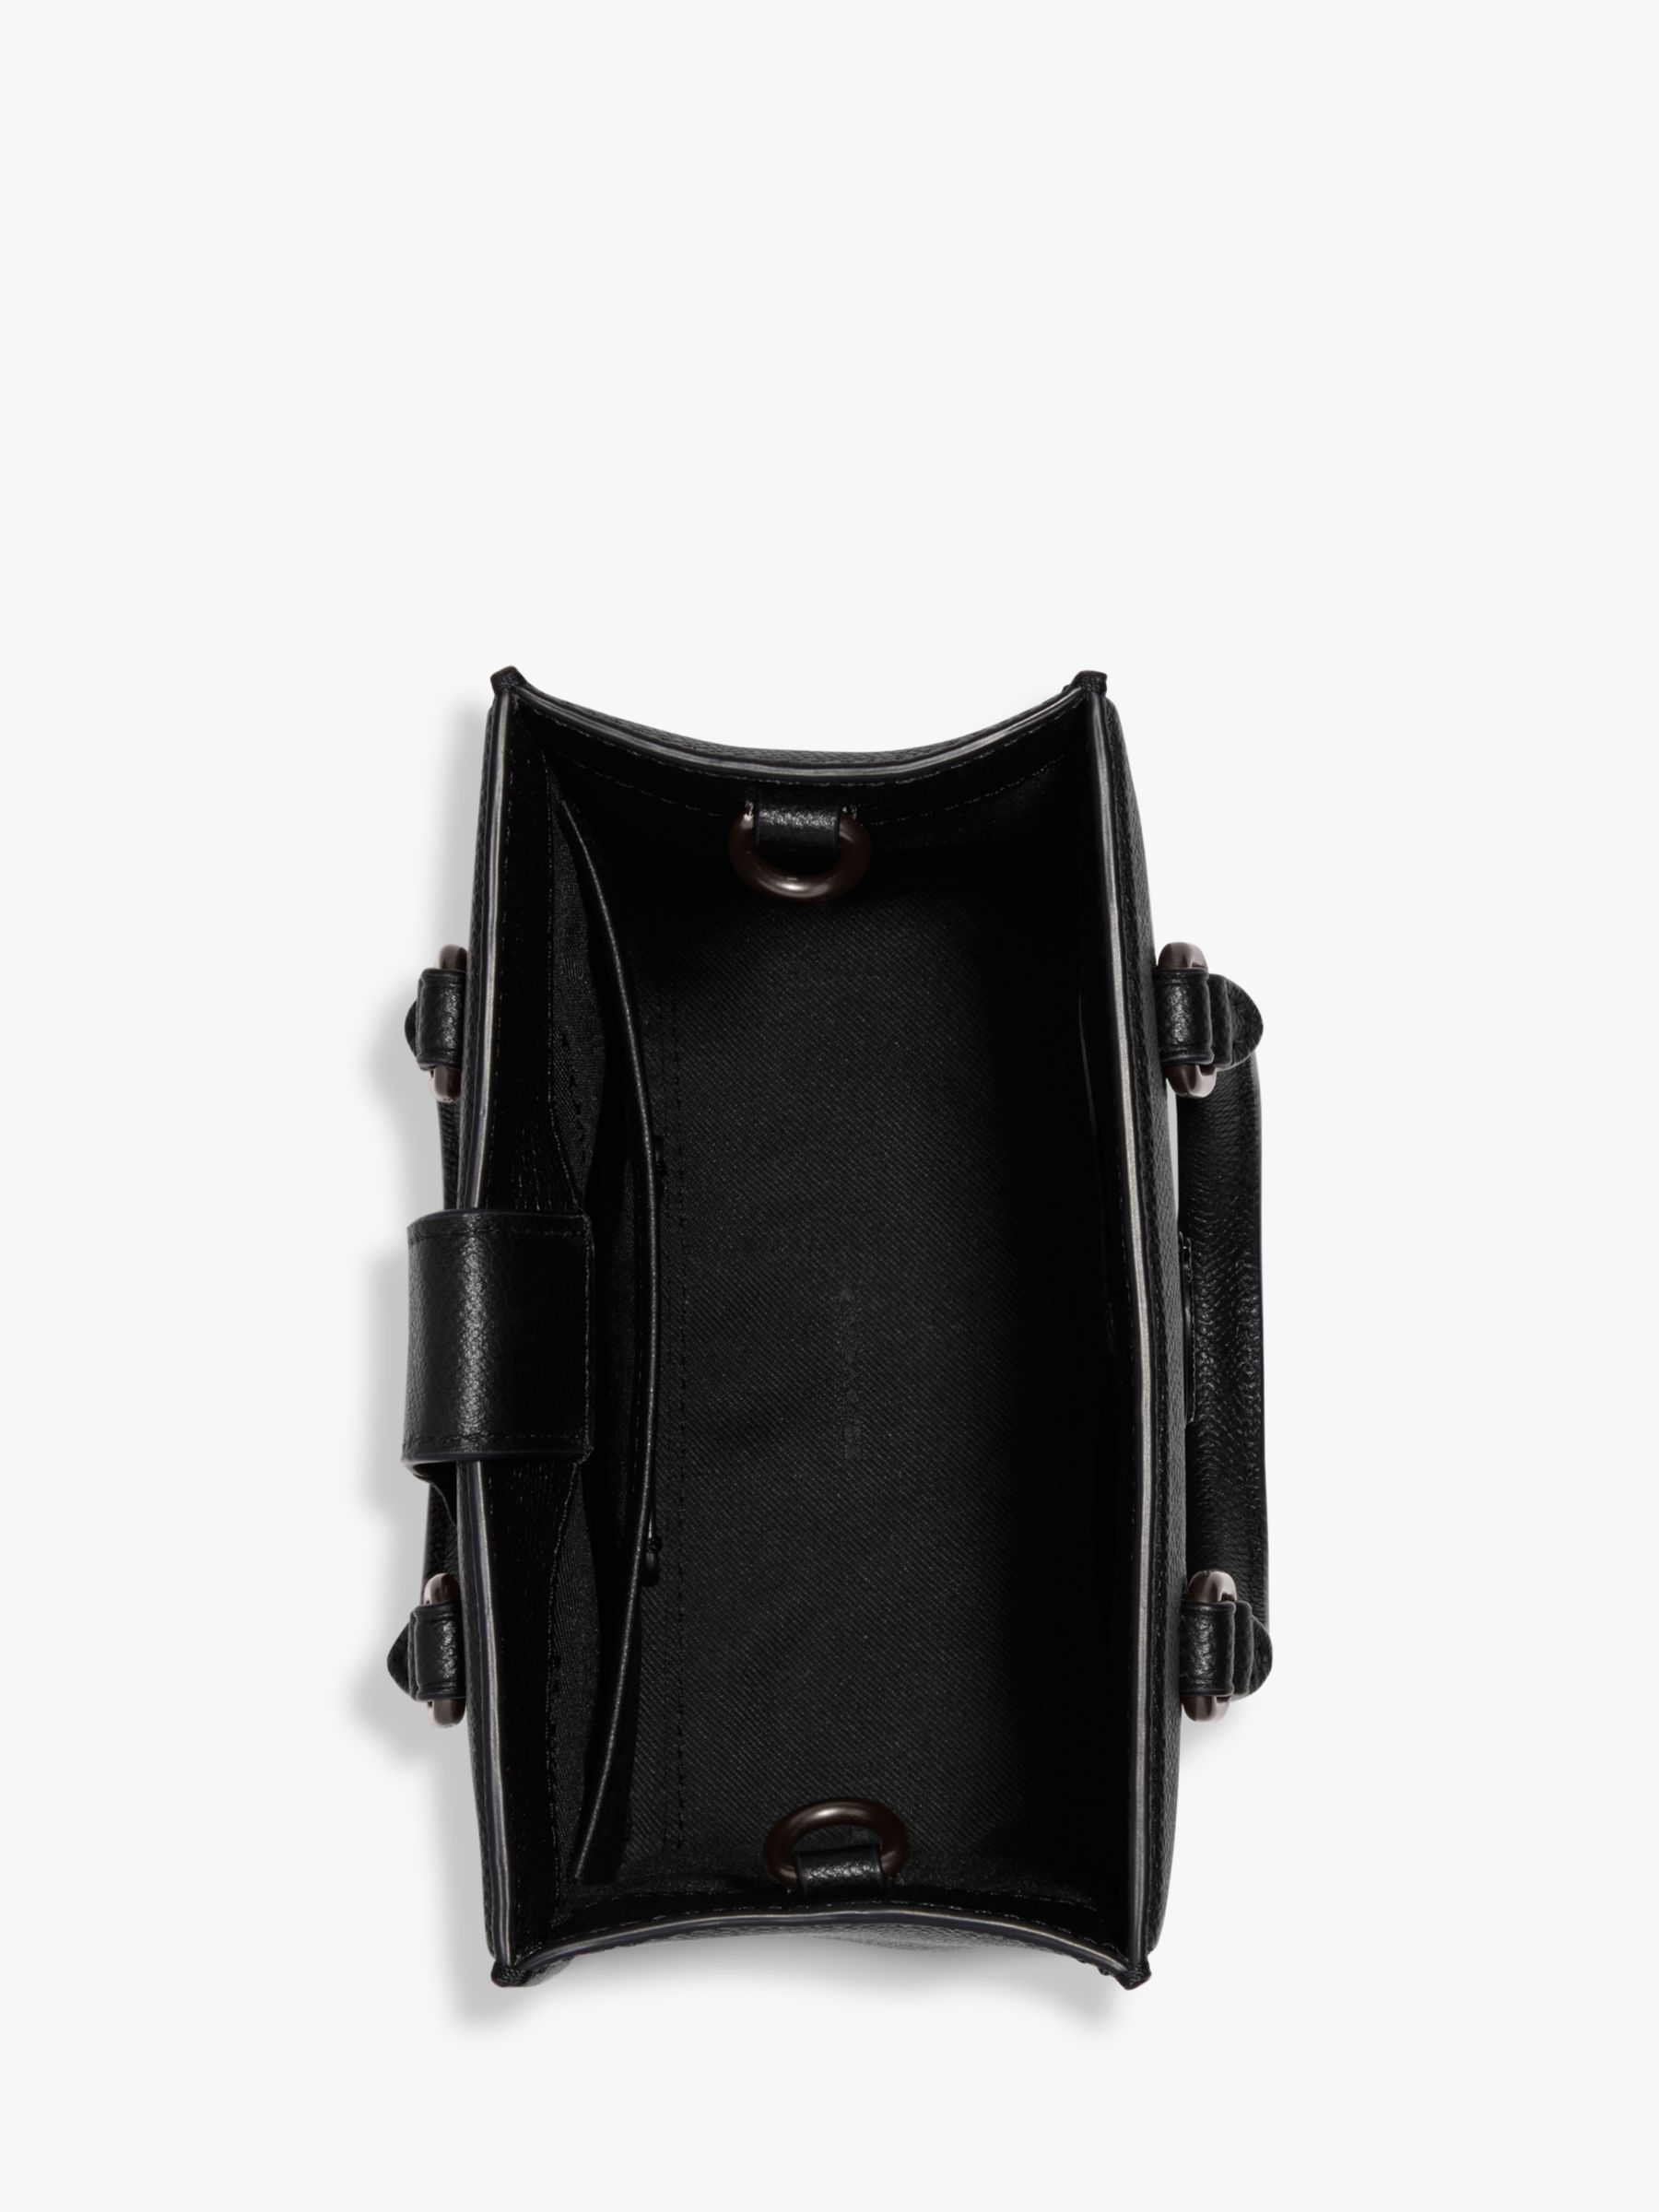 Buy Coach Tote 16 Leather Grab Bag, Black Online at johnlewis.com